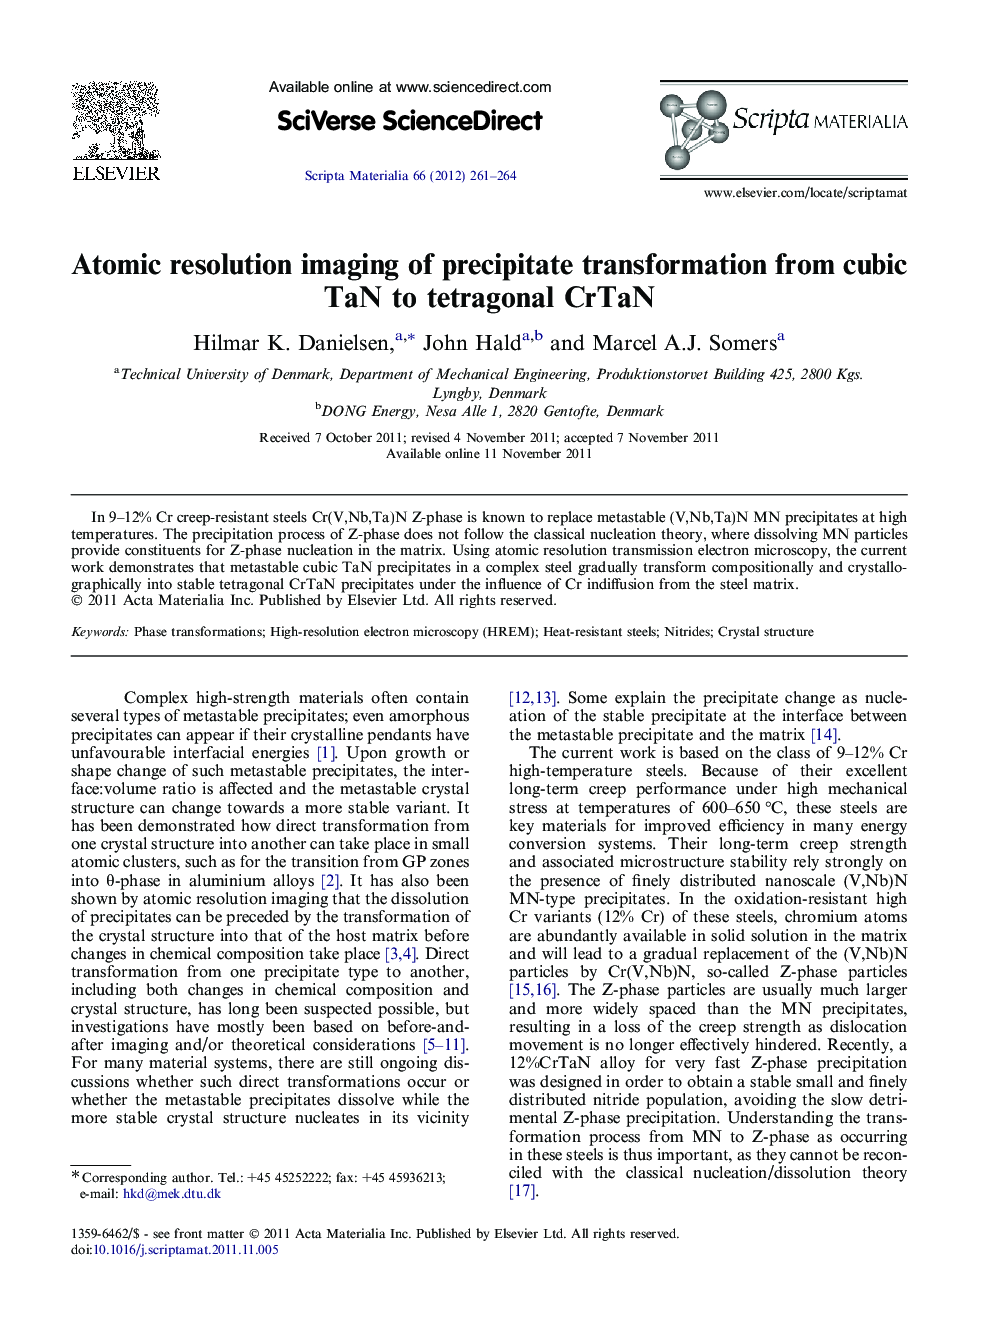 Atomic resolution imaging of precipitate transformation from cubic TaN to tetragonal CrTaN